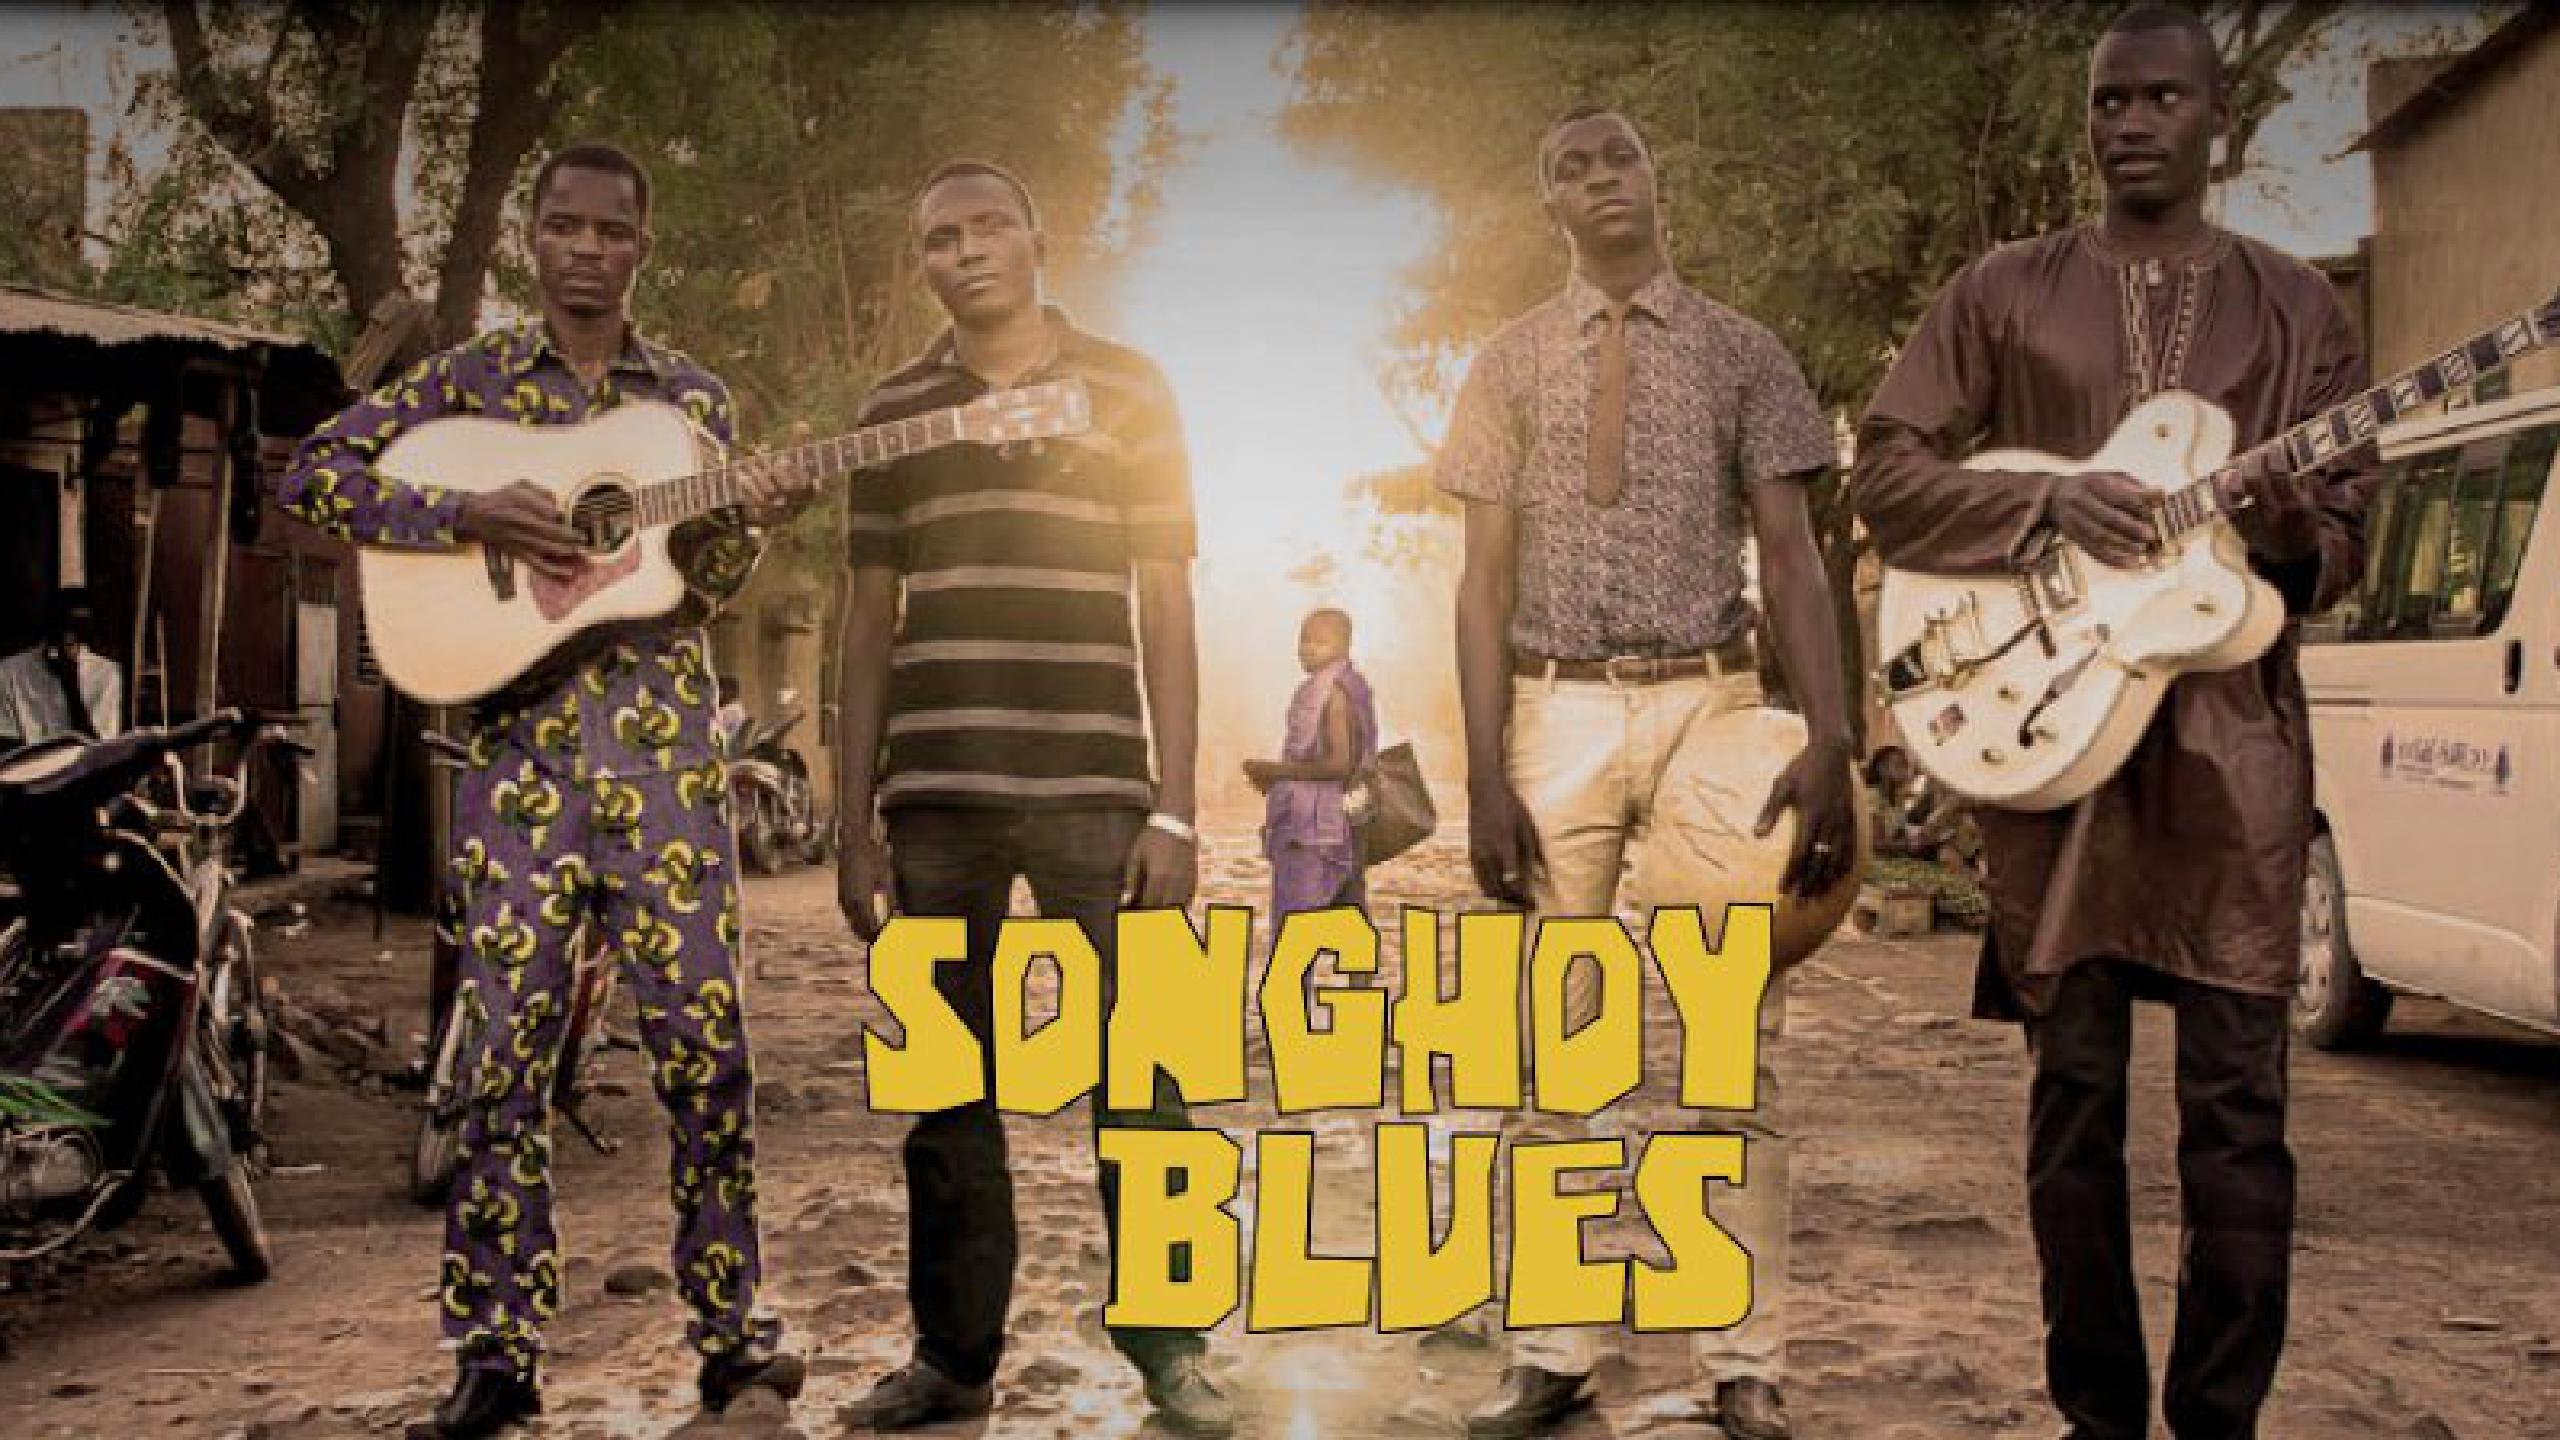 songhoy blues tour